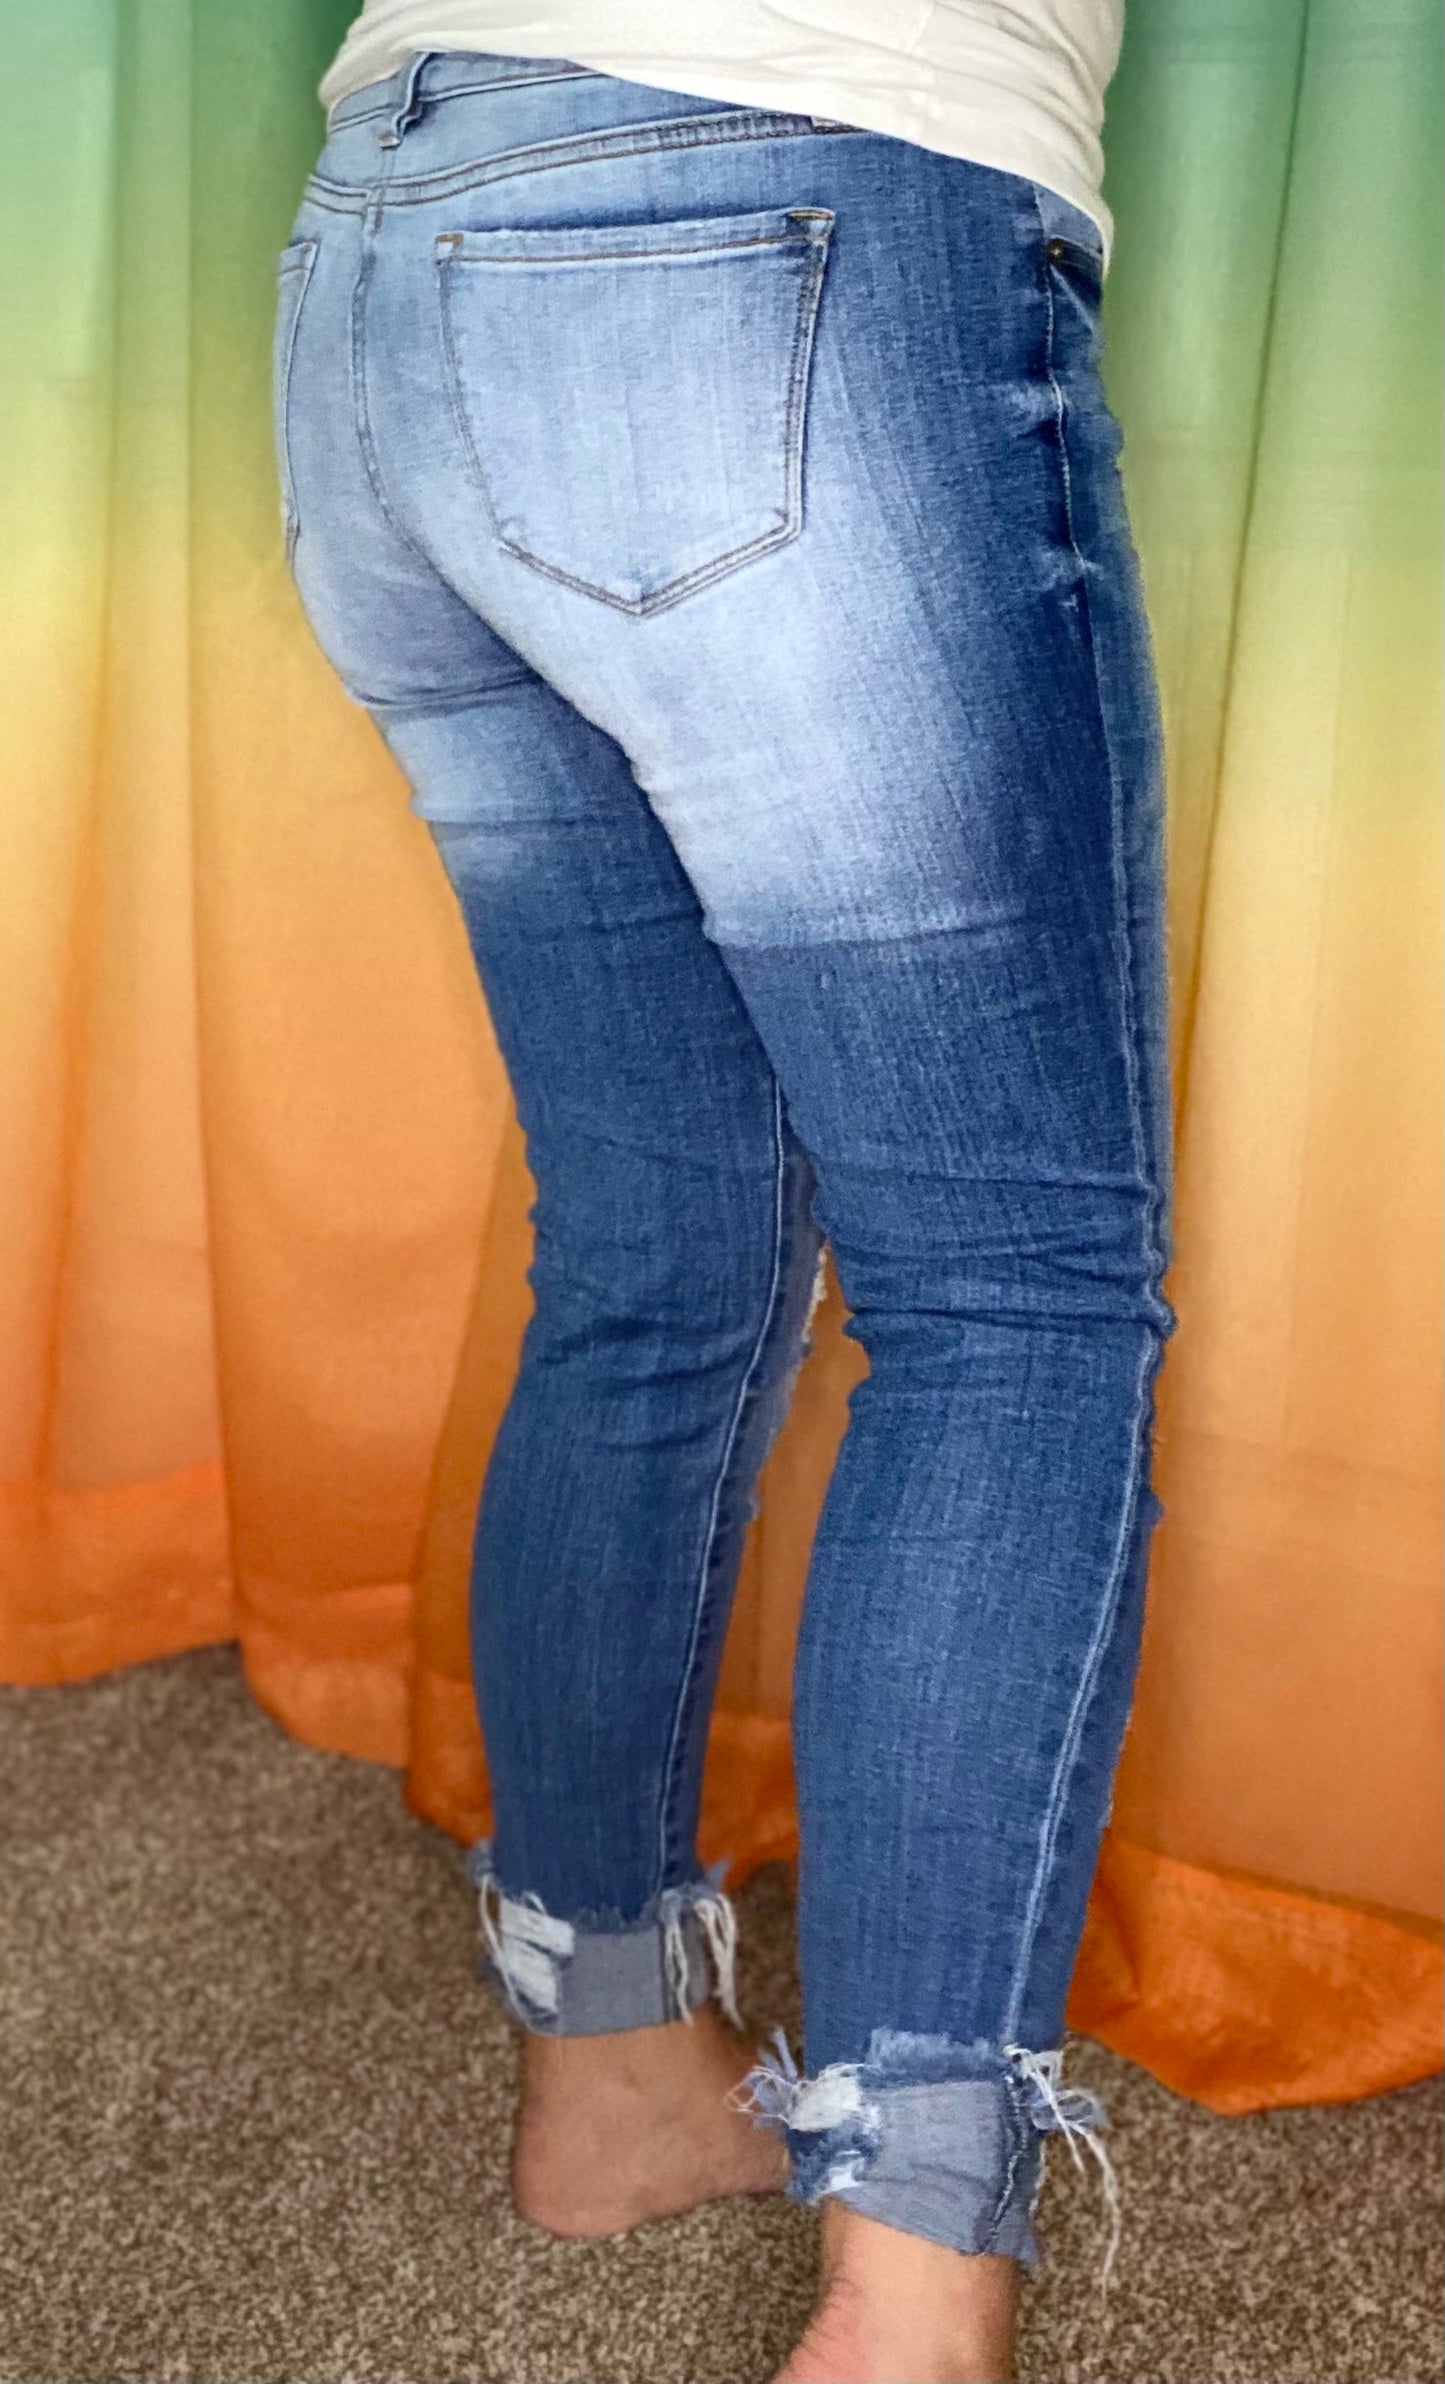 KanCan Distressed Skinny Jeans